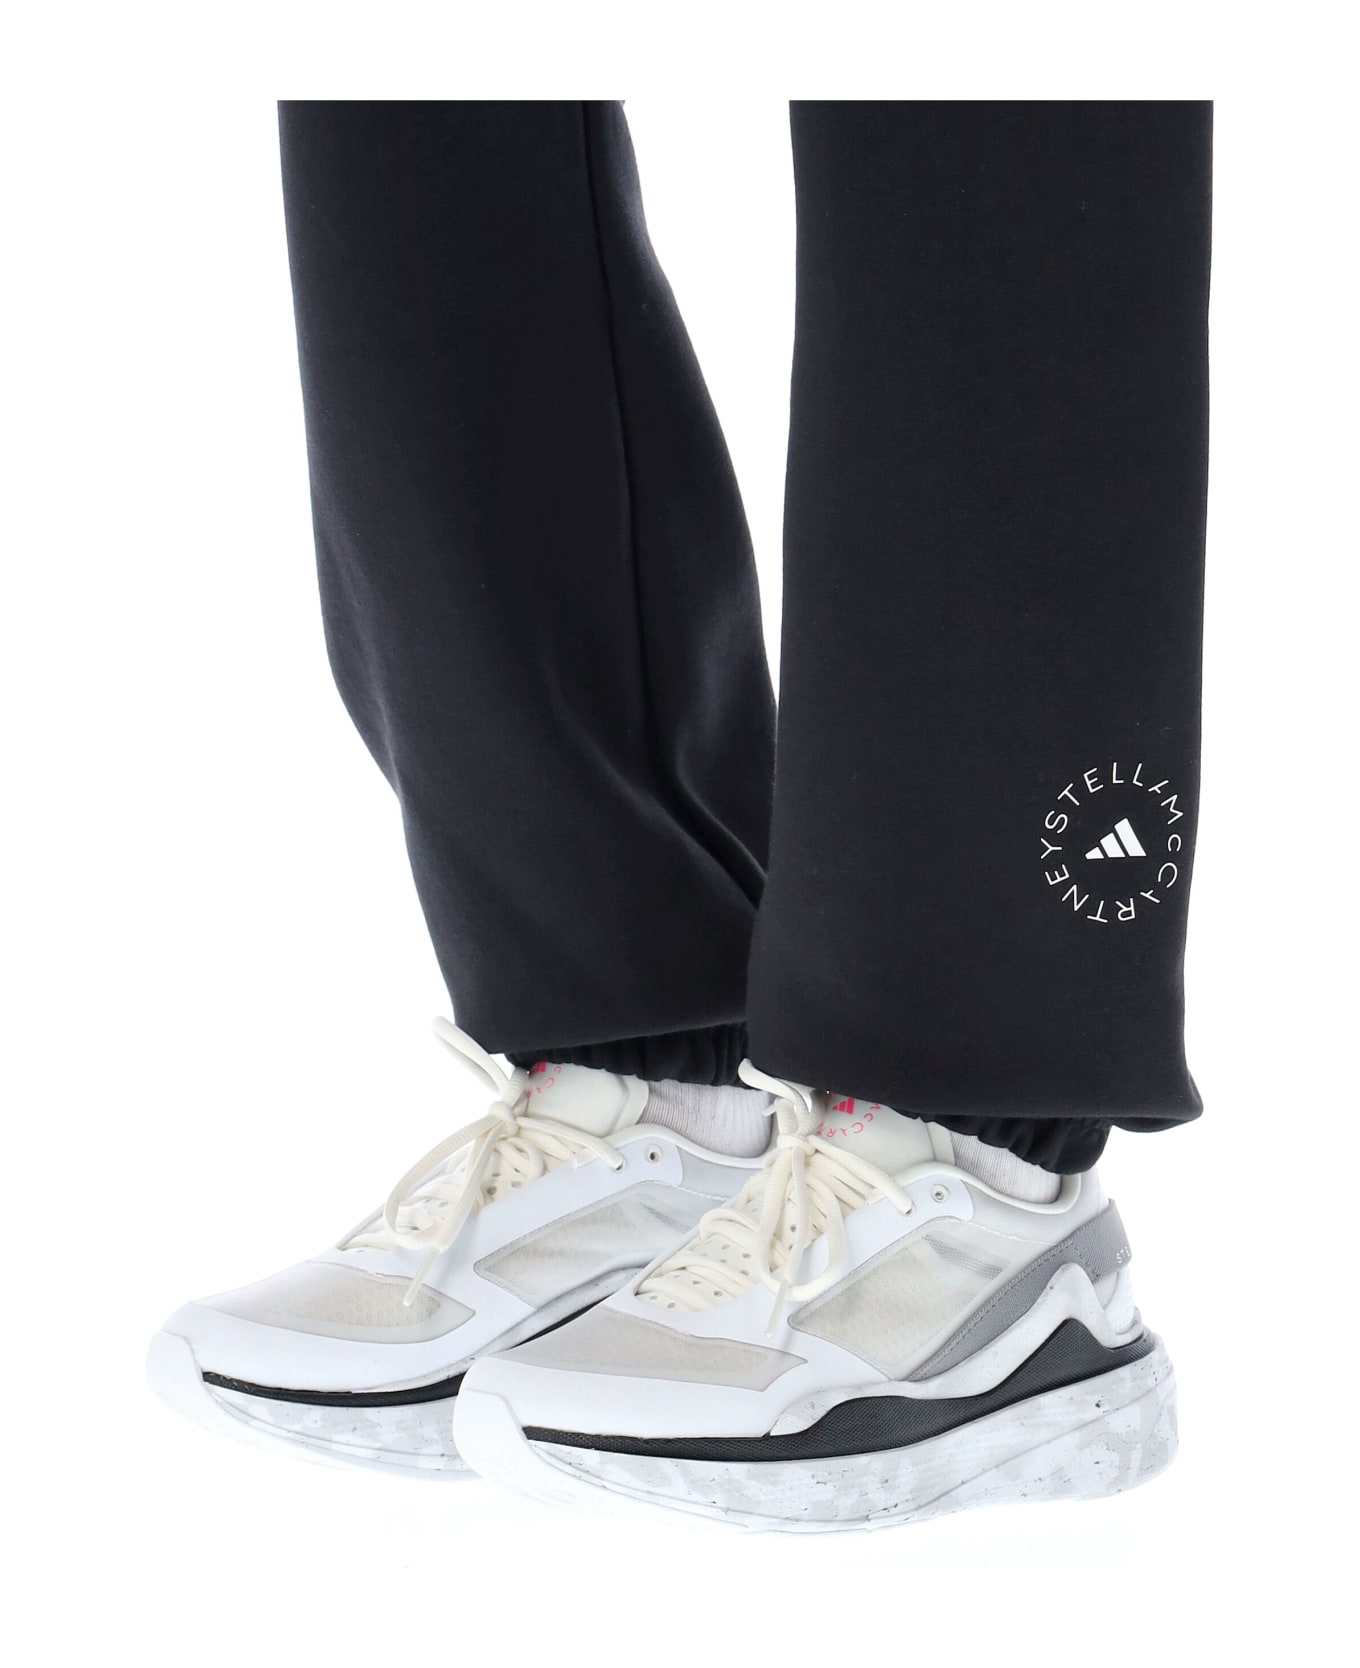 Adidas by Stella McCartney Sweat Tracksuit Bottoms - Black/white